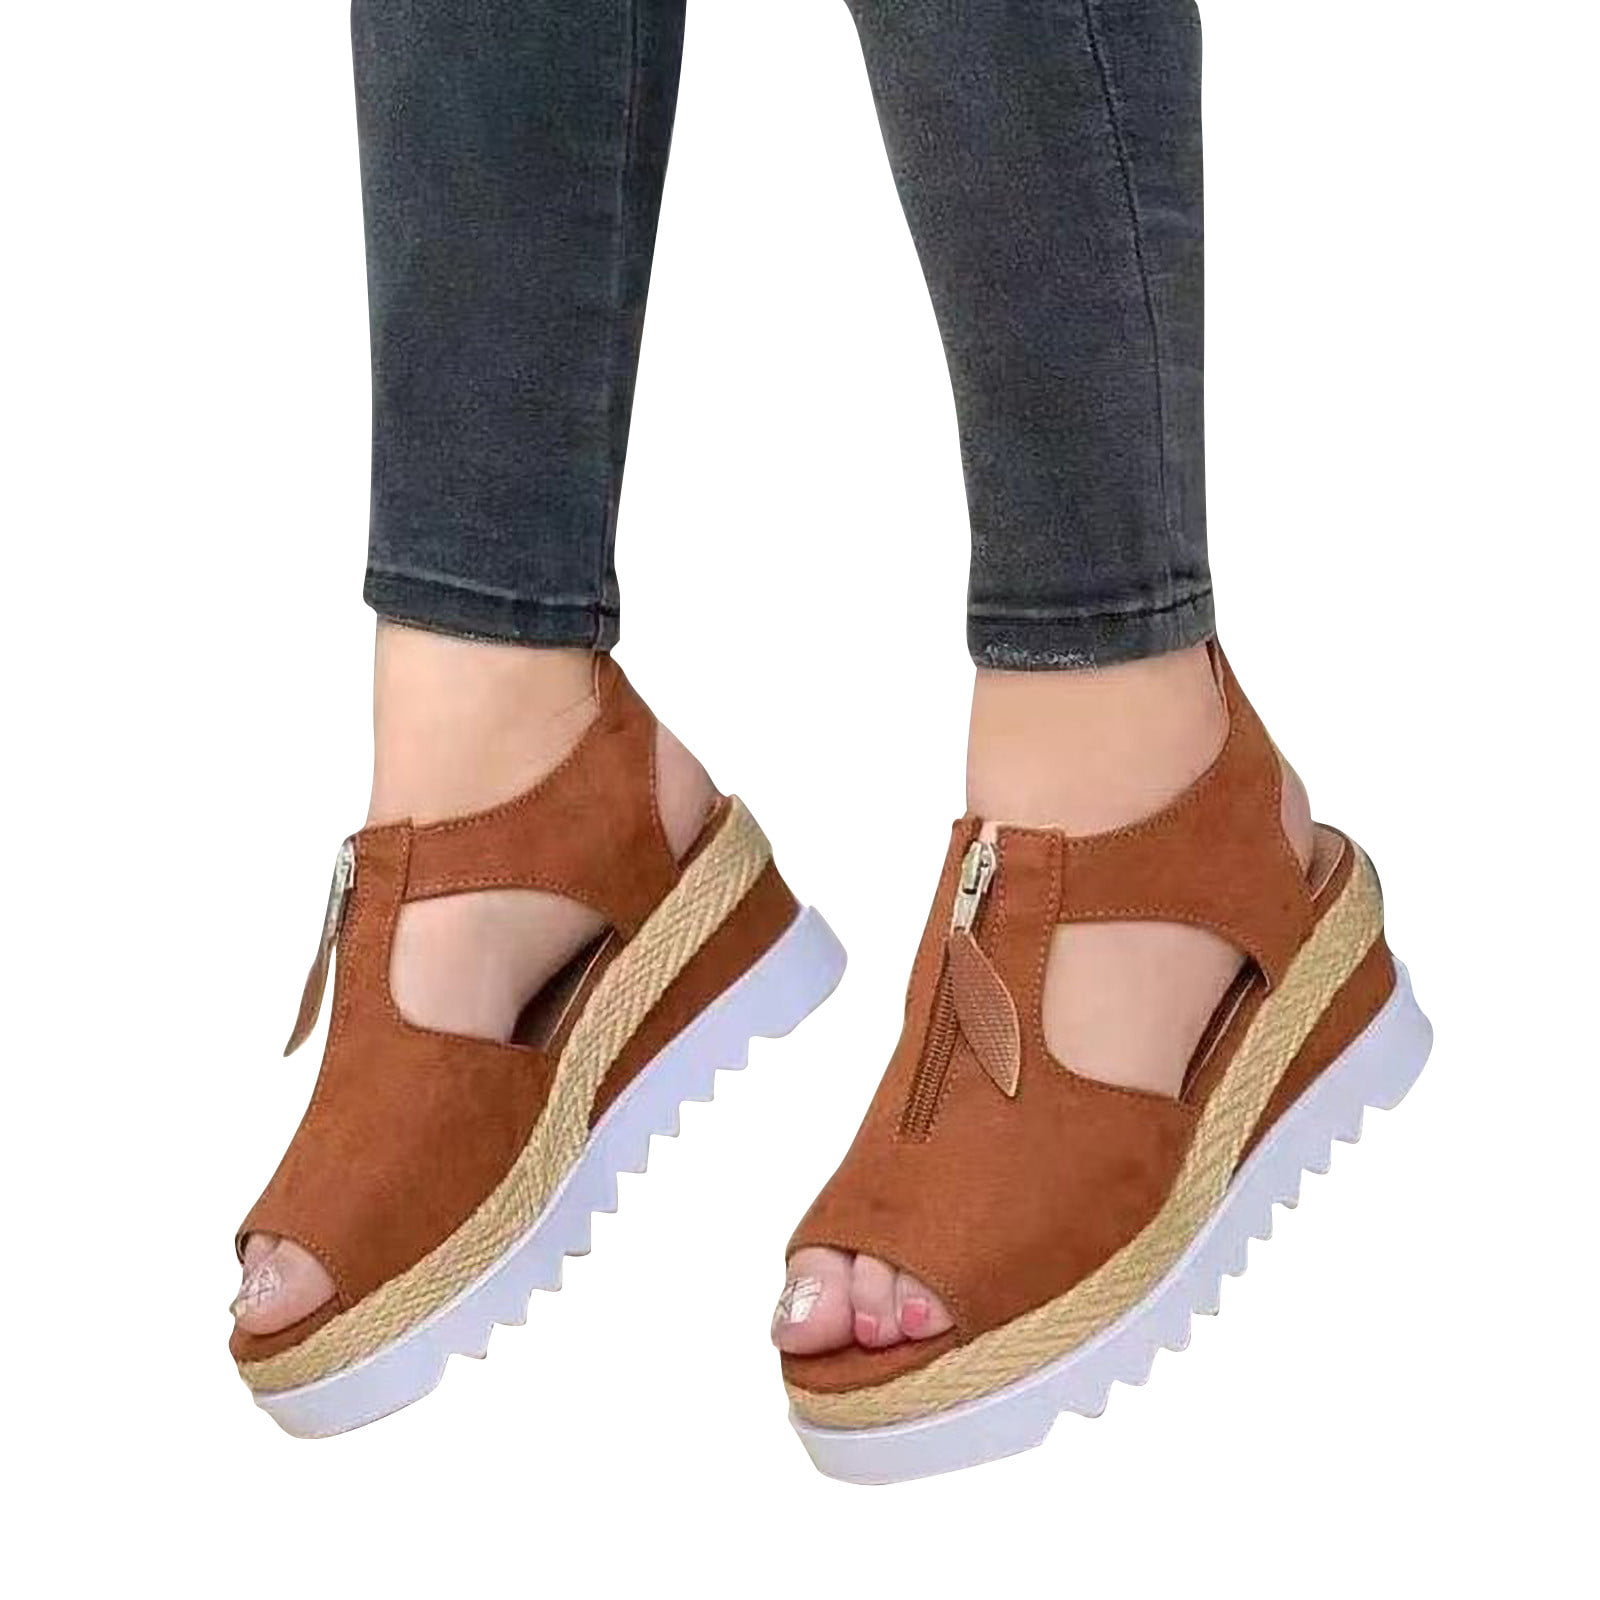 Fashion Women Casual Summer Platform Shoes Wedges Flip Flops Outdoor Slippers Pink 35/4.5 B M US Women